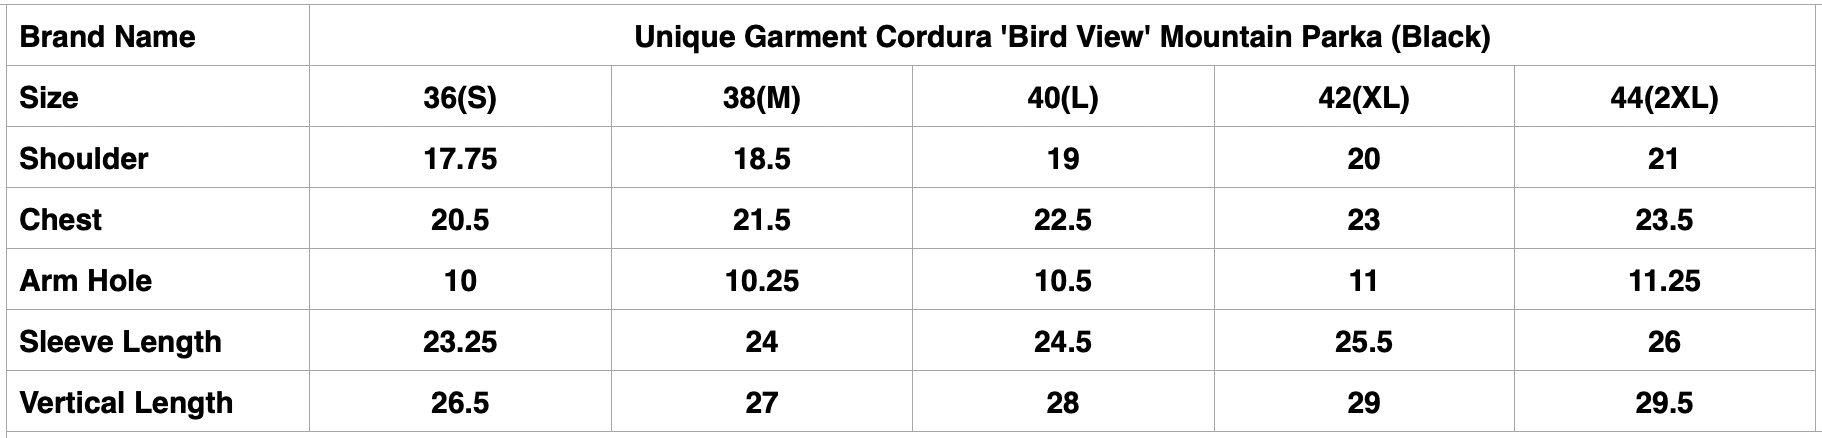 Unique Garment Cordura 'Bird View' Mountain Parka (Black)